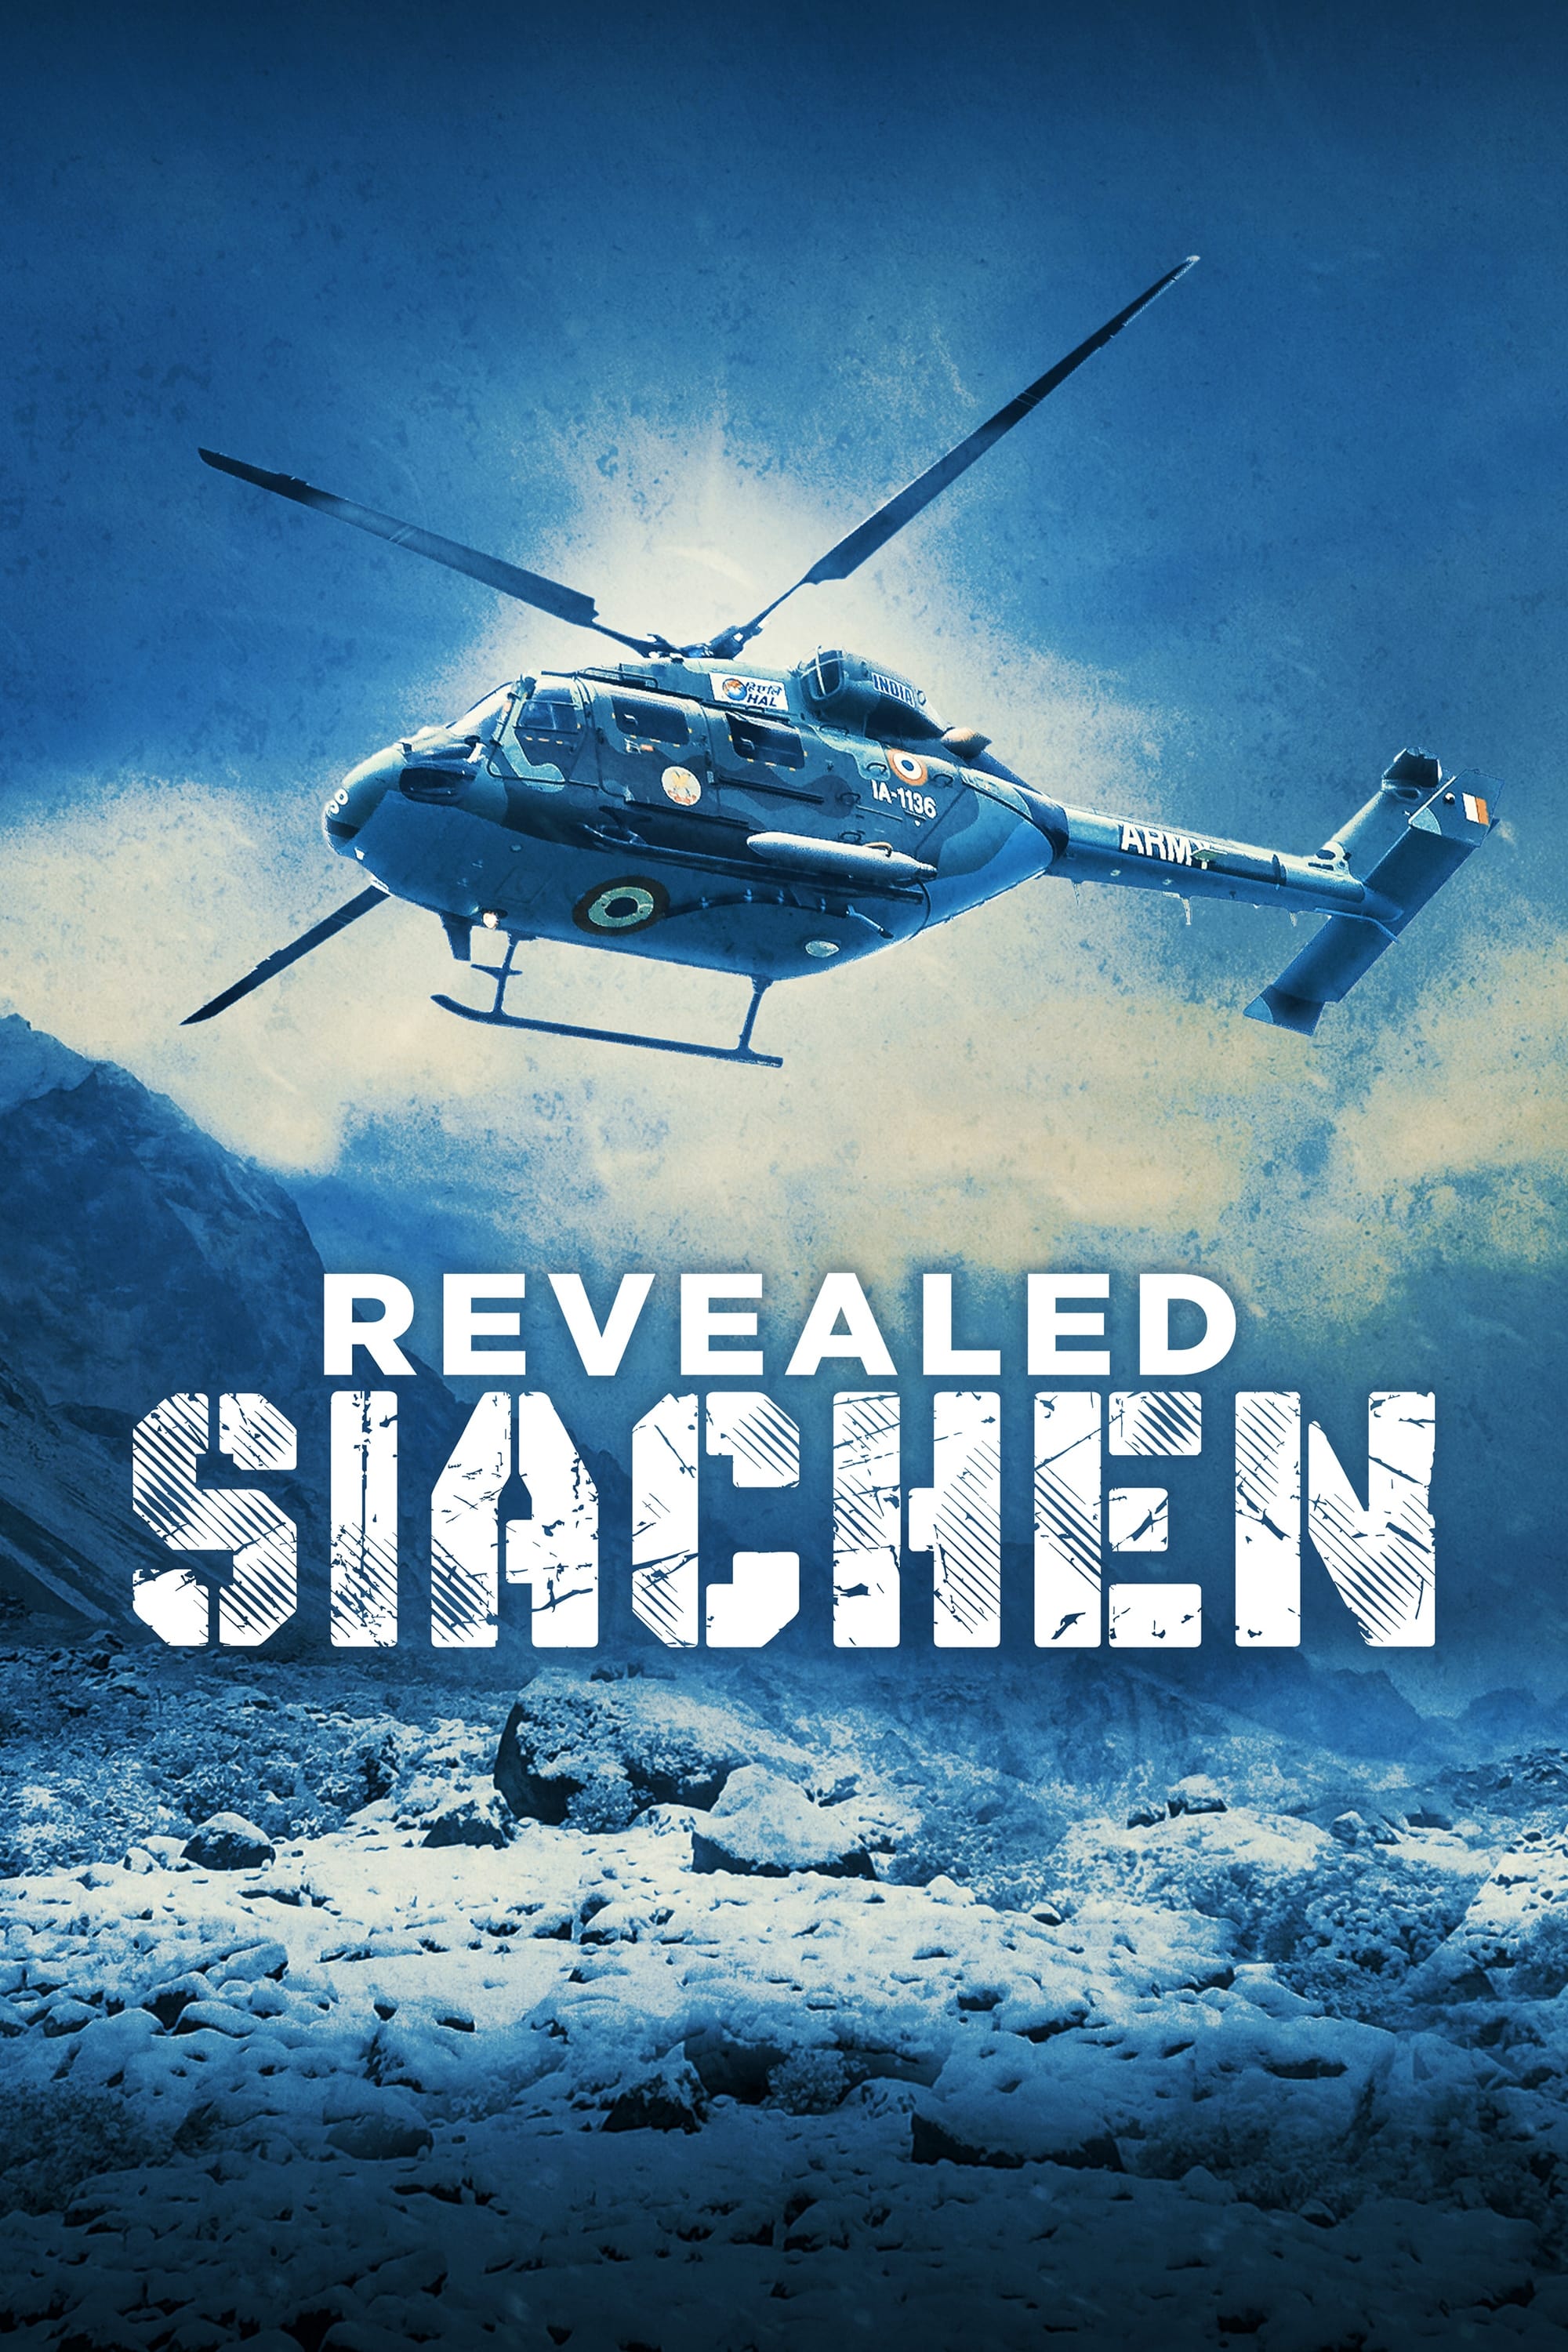 Revealed Siachen